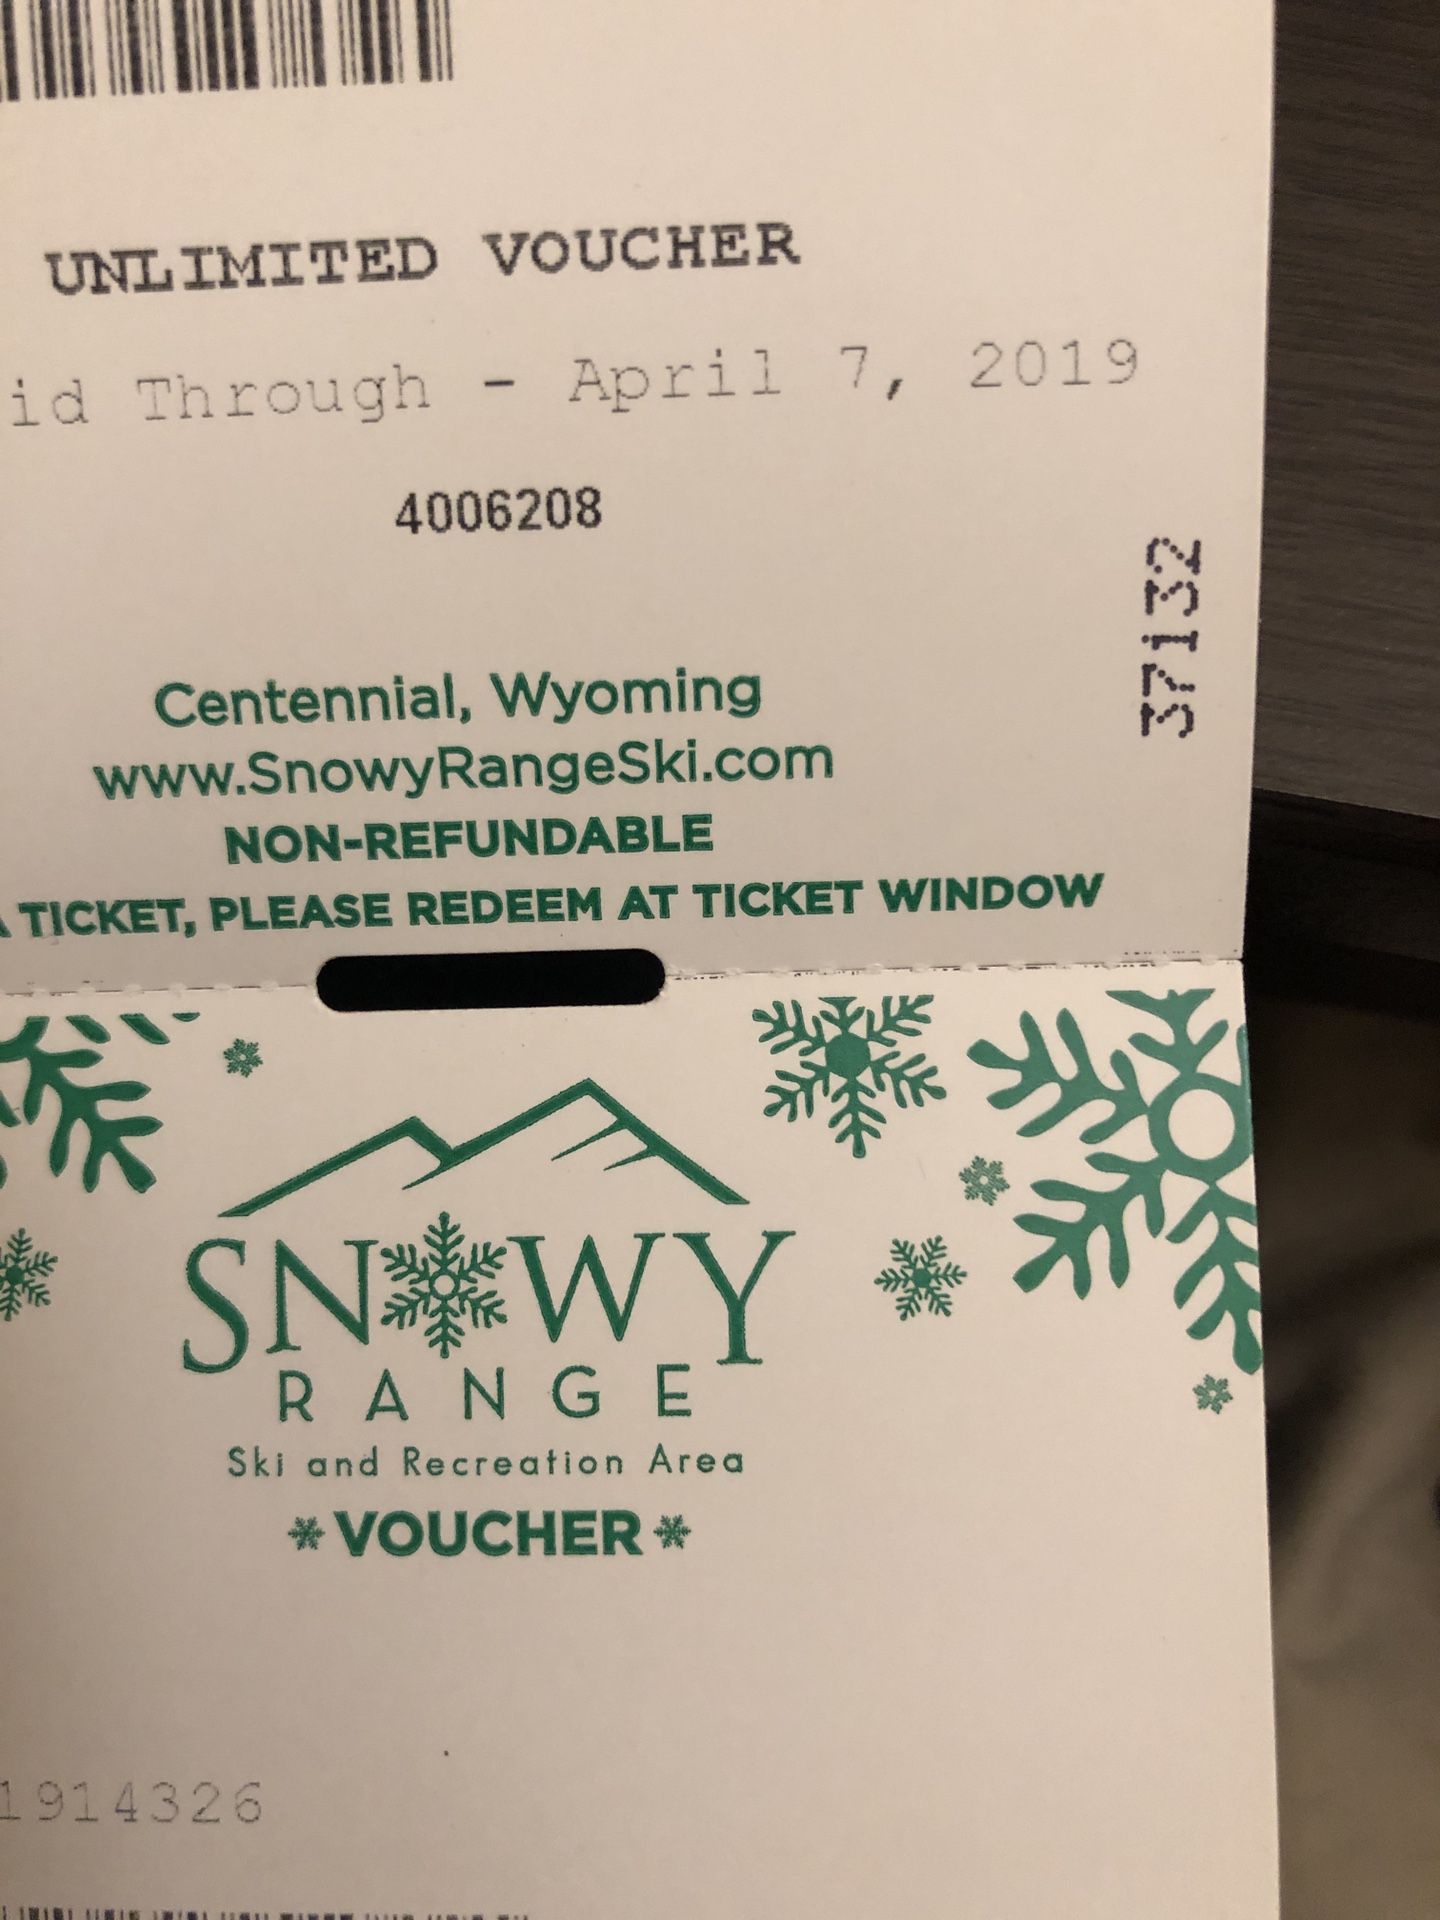 X8 snowy range ski lift tickets 25 each